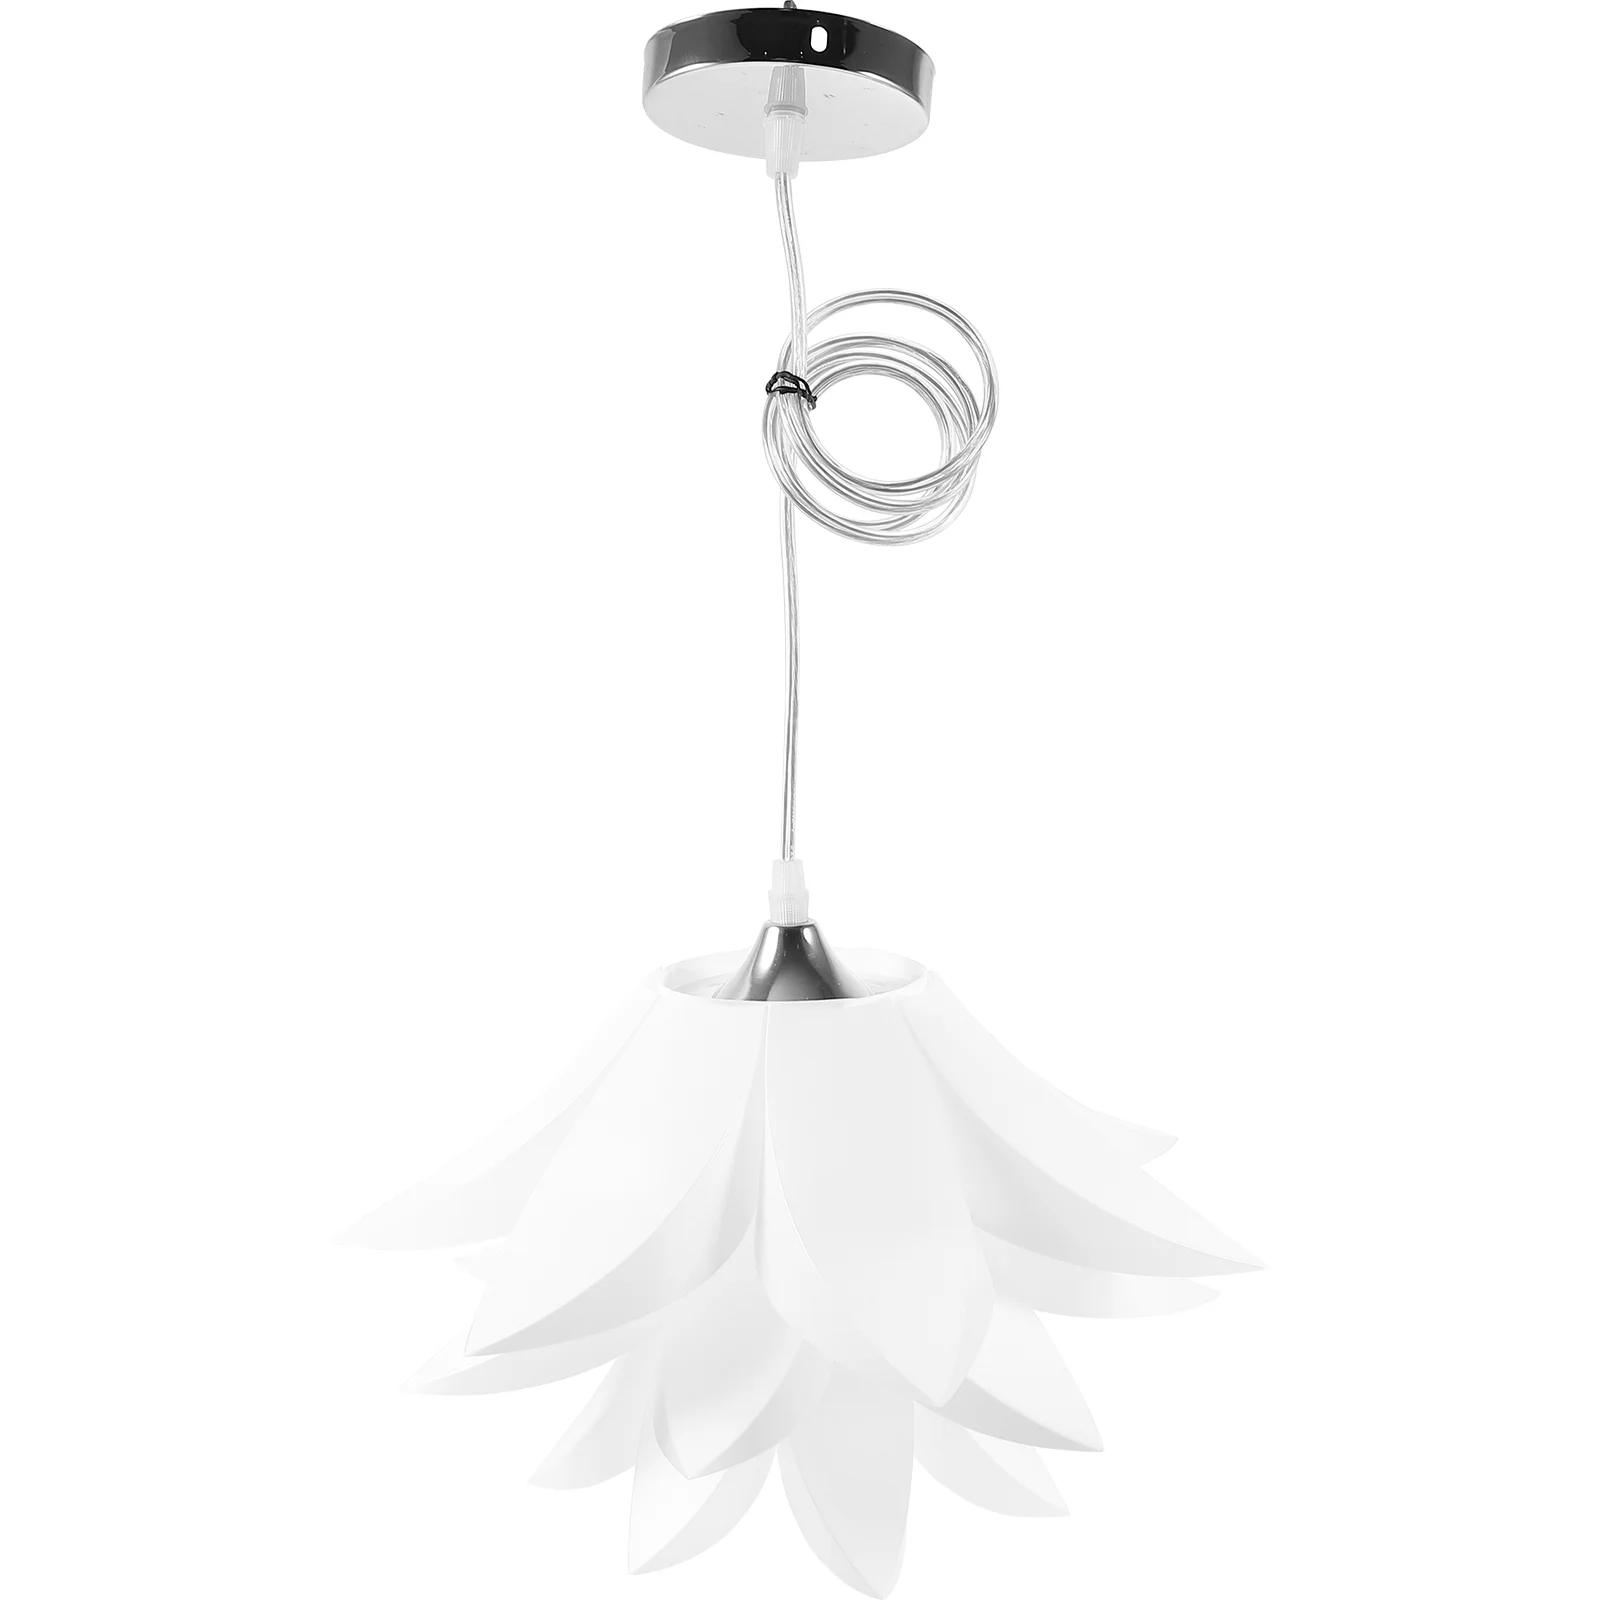 

Chandelier Ceiling Light Shade Decorative Lampshade LED Pendant Lotus Droplight Bedroom